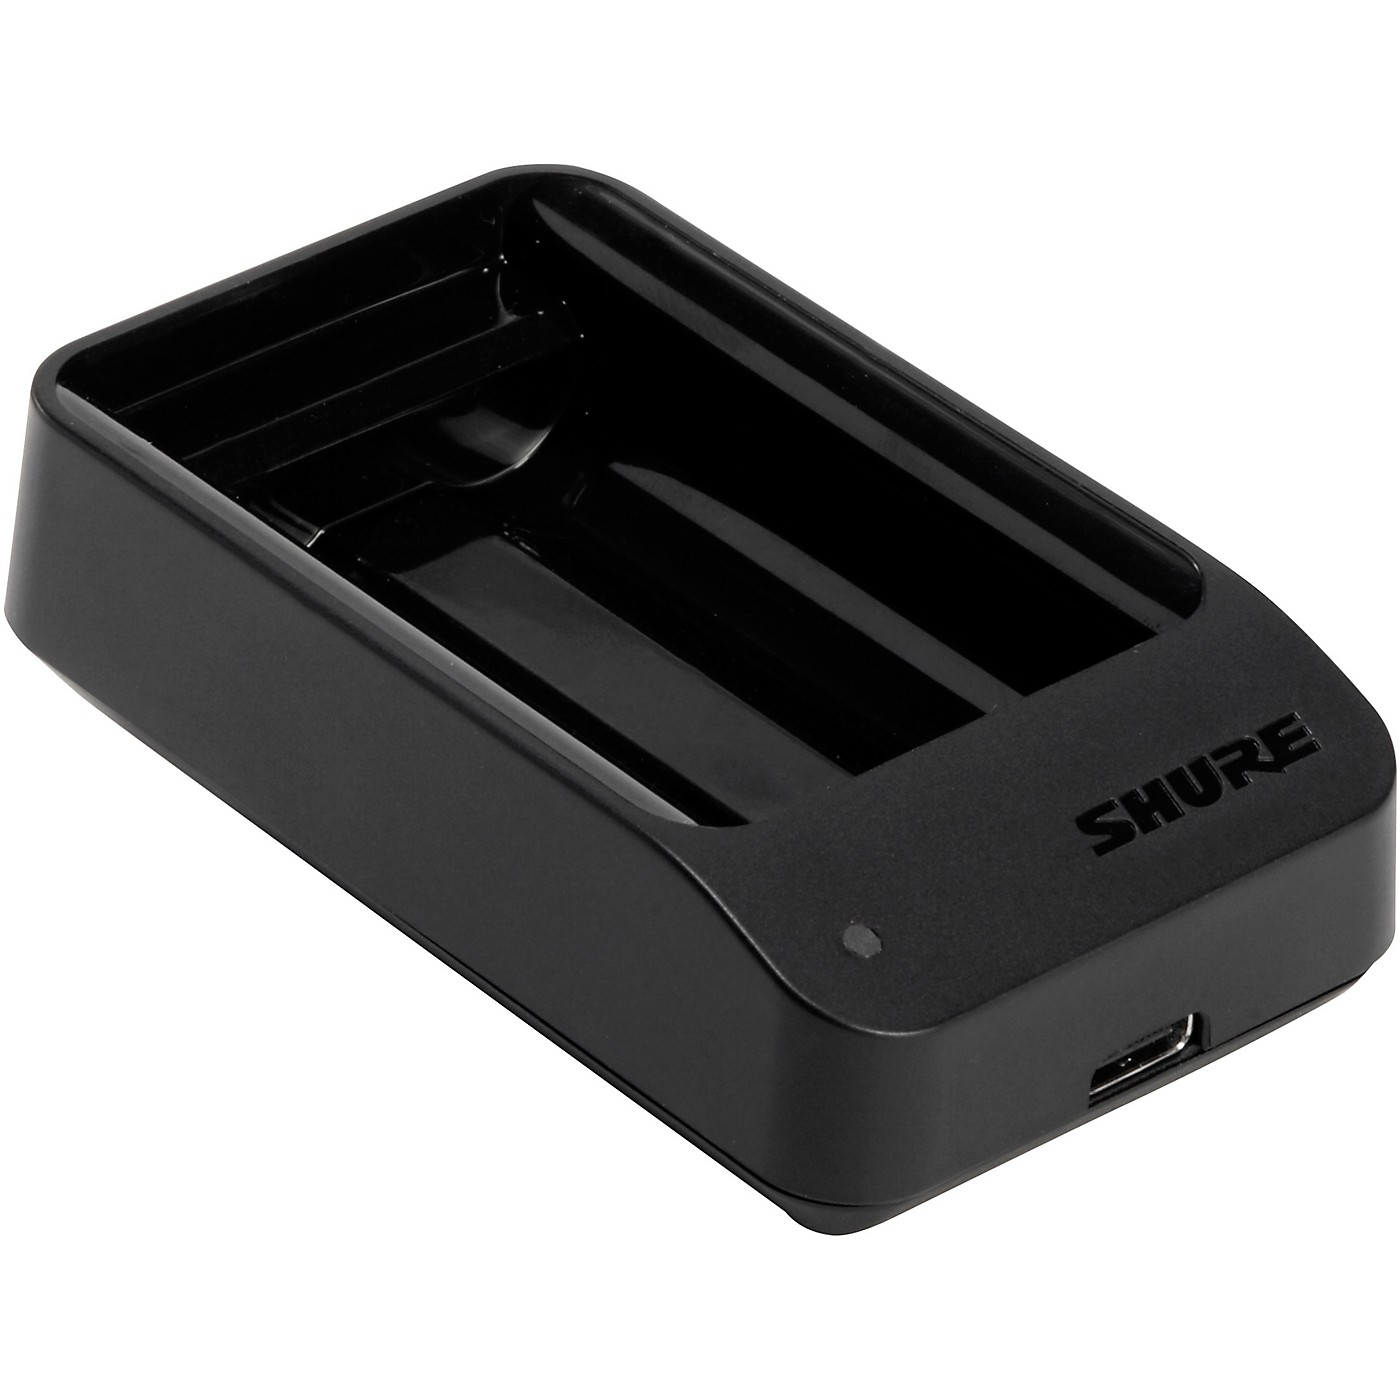 Shure SBC10-903-US Single Battery Charger for SB903 Battery thumbnail